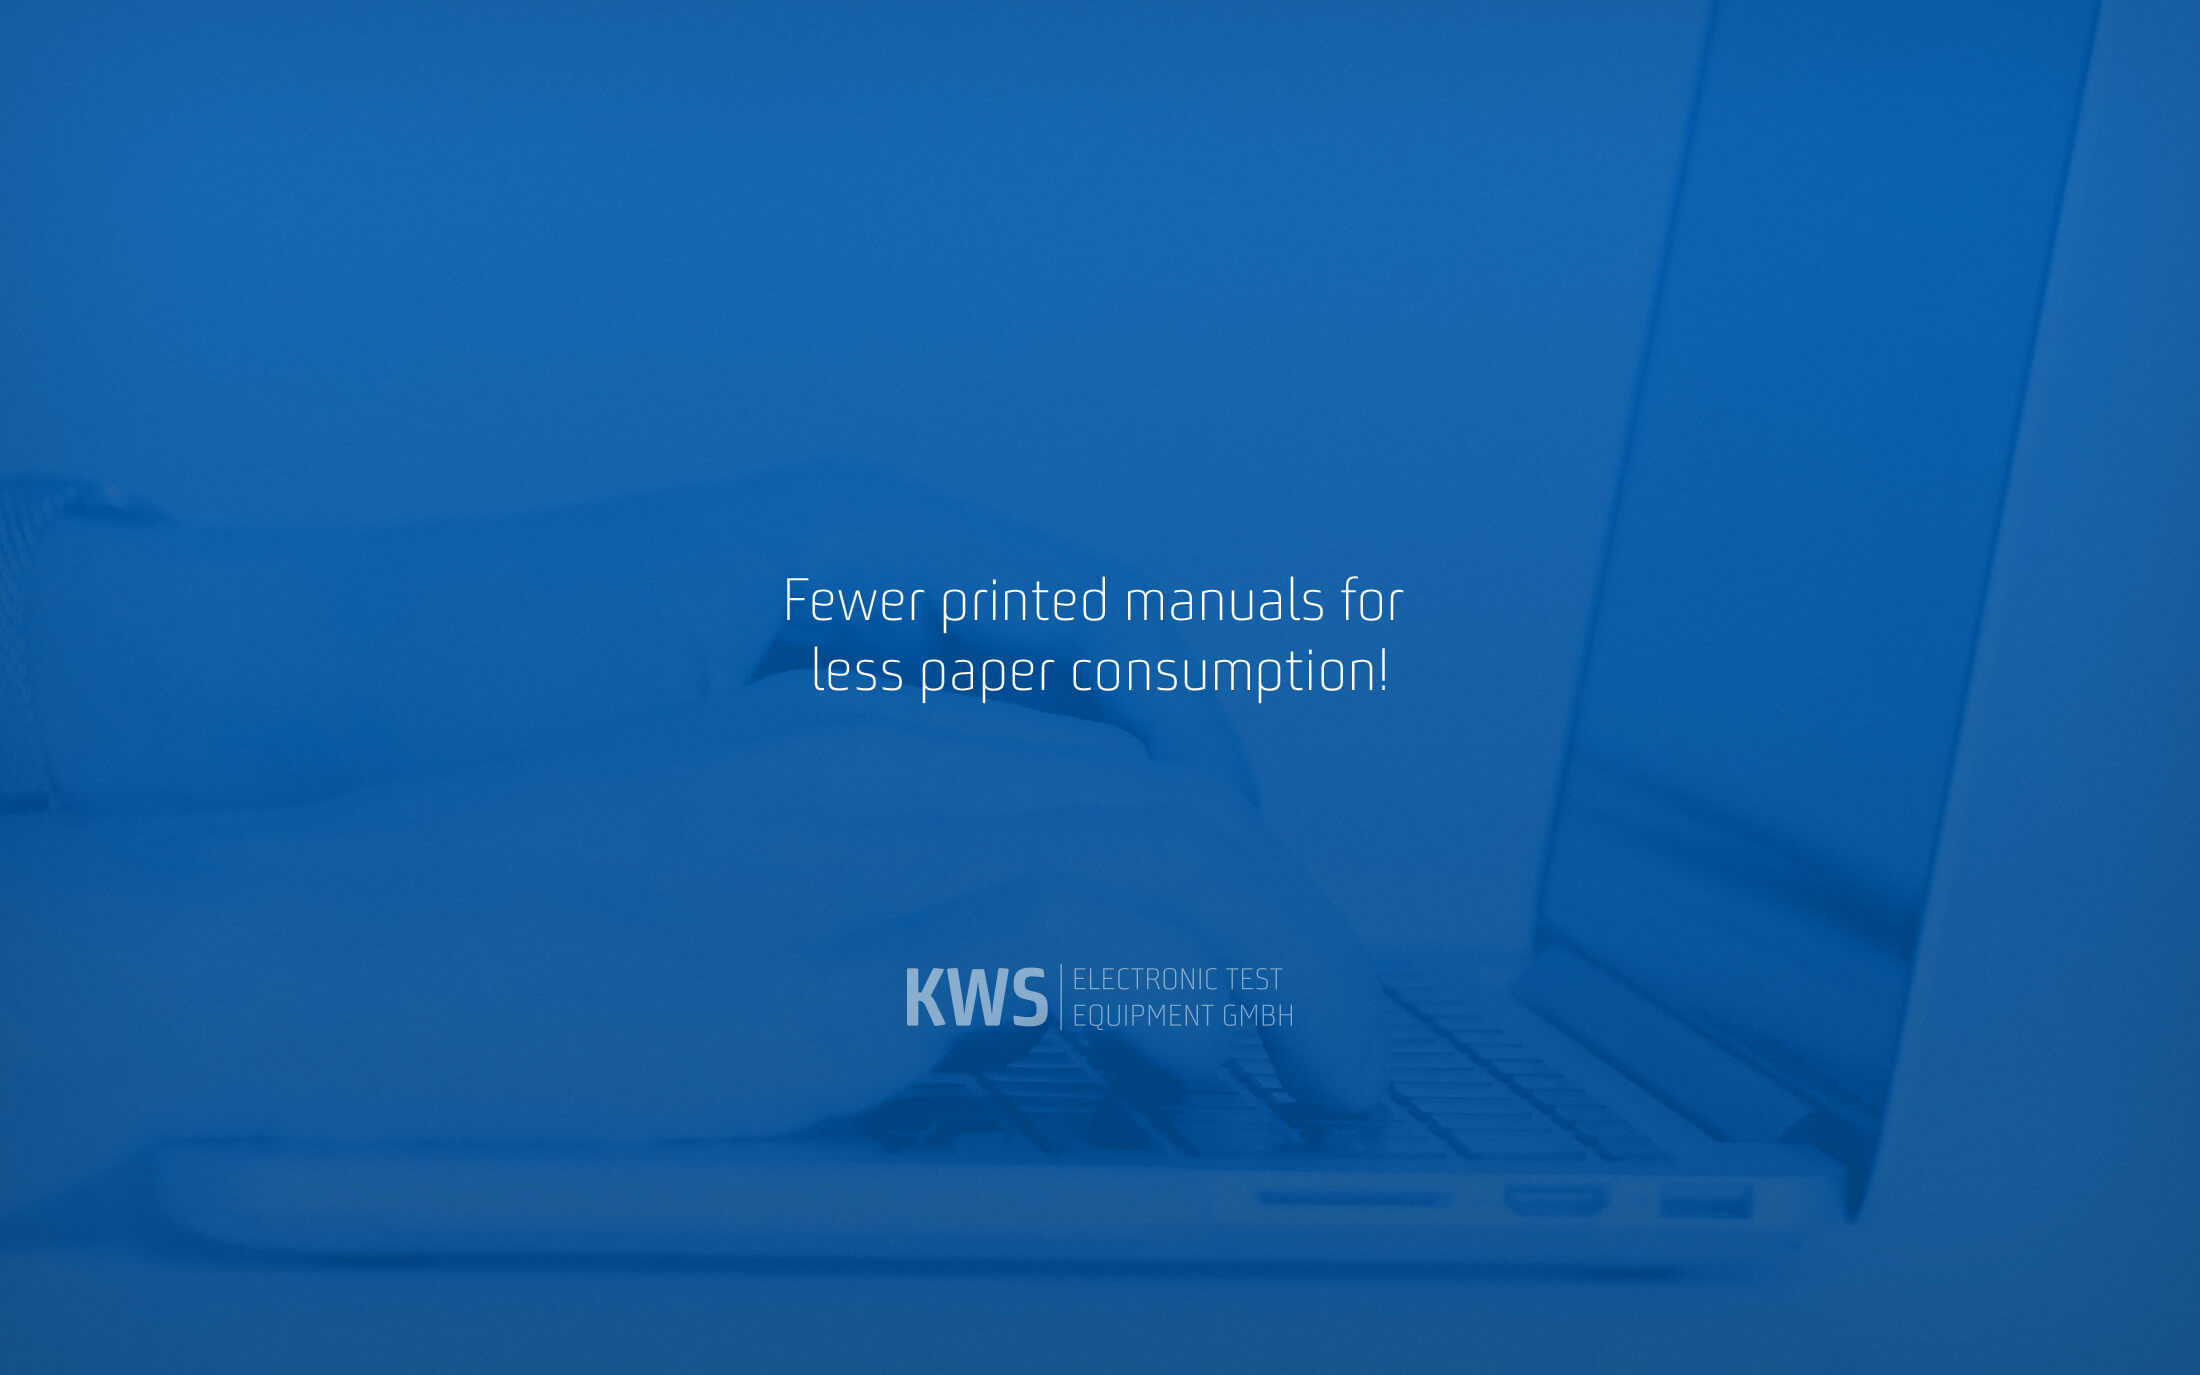 KWS Electronic News 2019: Fewer printed manuals